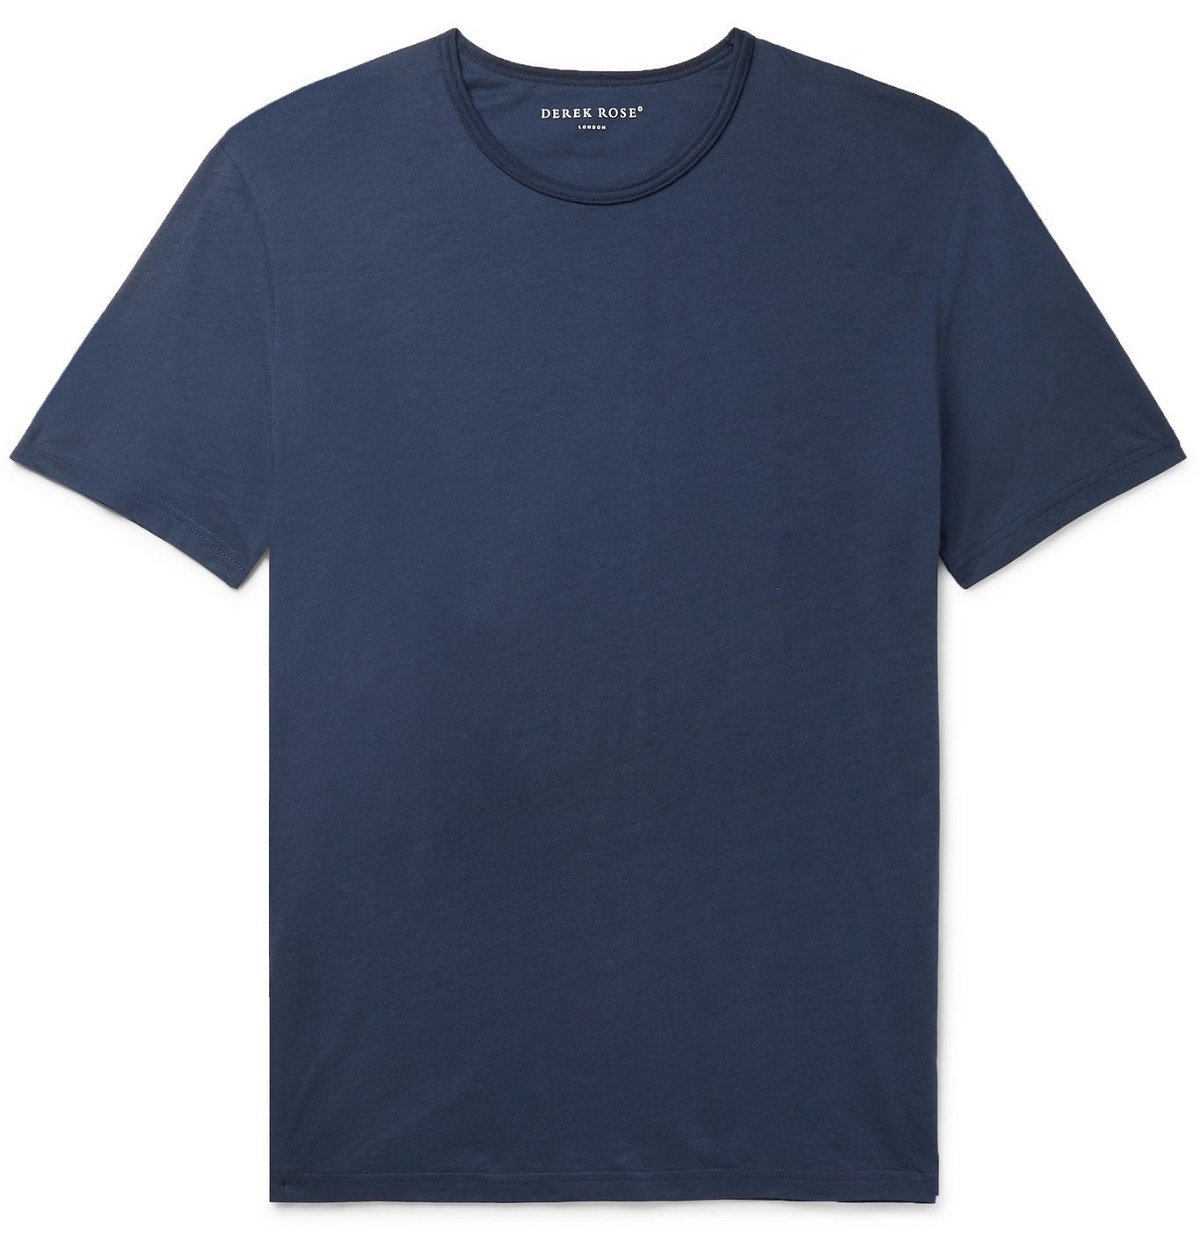 DEREK ROSE - Riley 1 Pima Cotton-Jersey T-Shirt - Blue Derek Rose